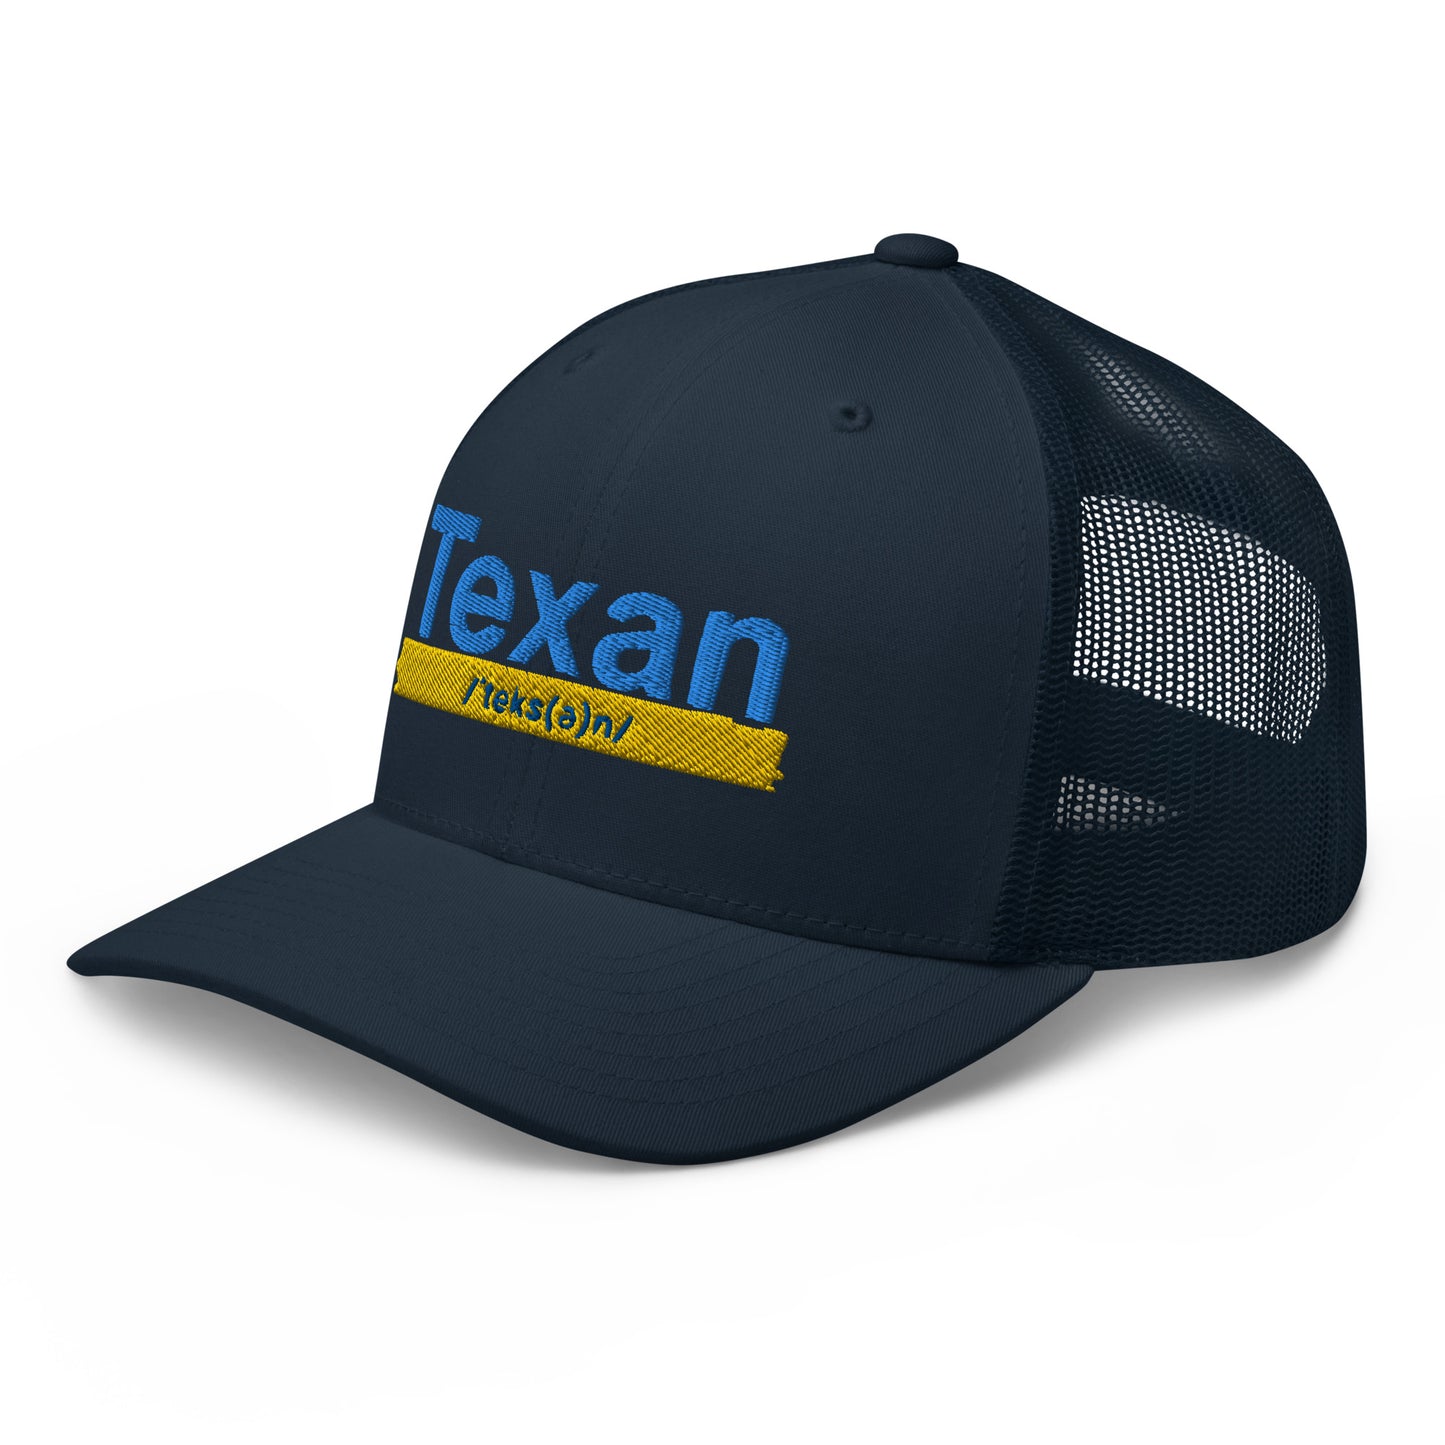 Texan Trucker Hat